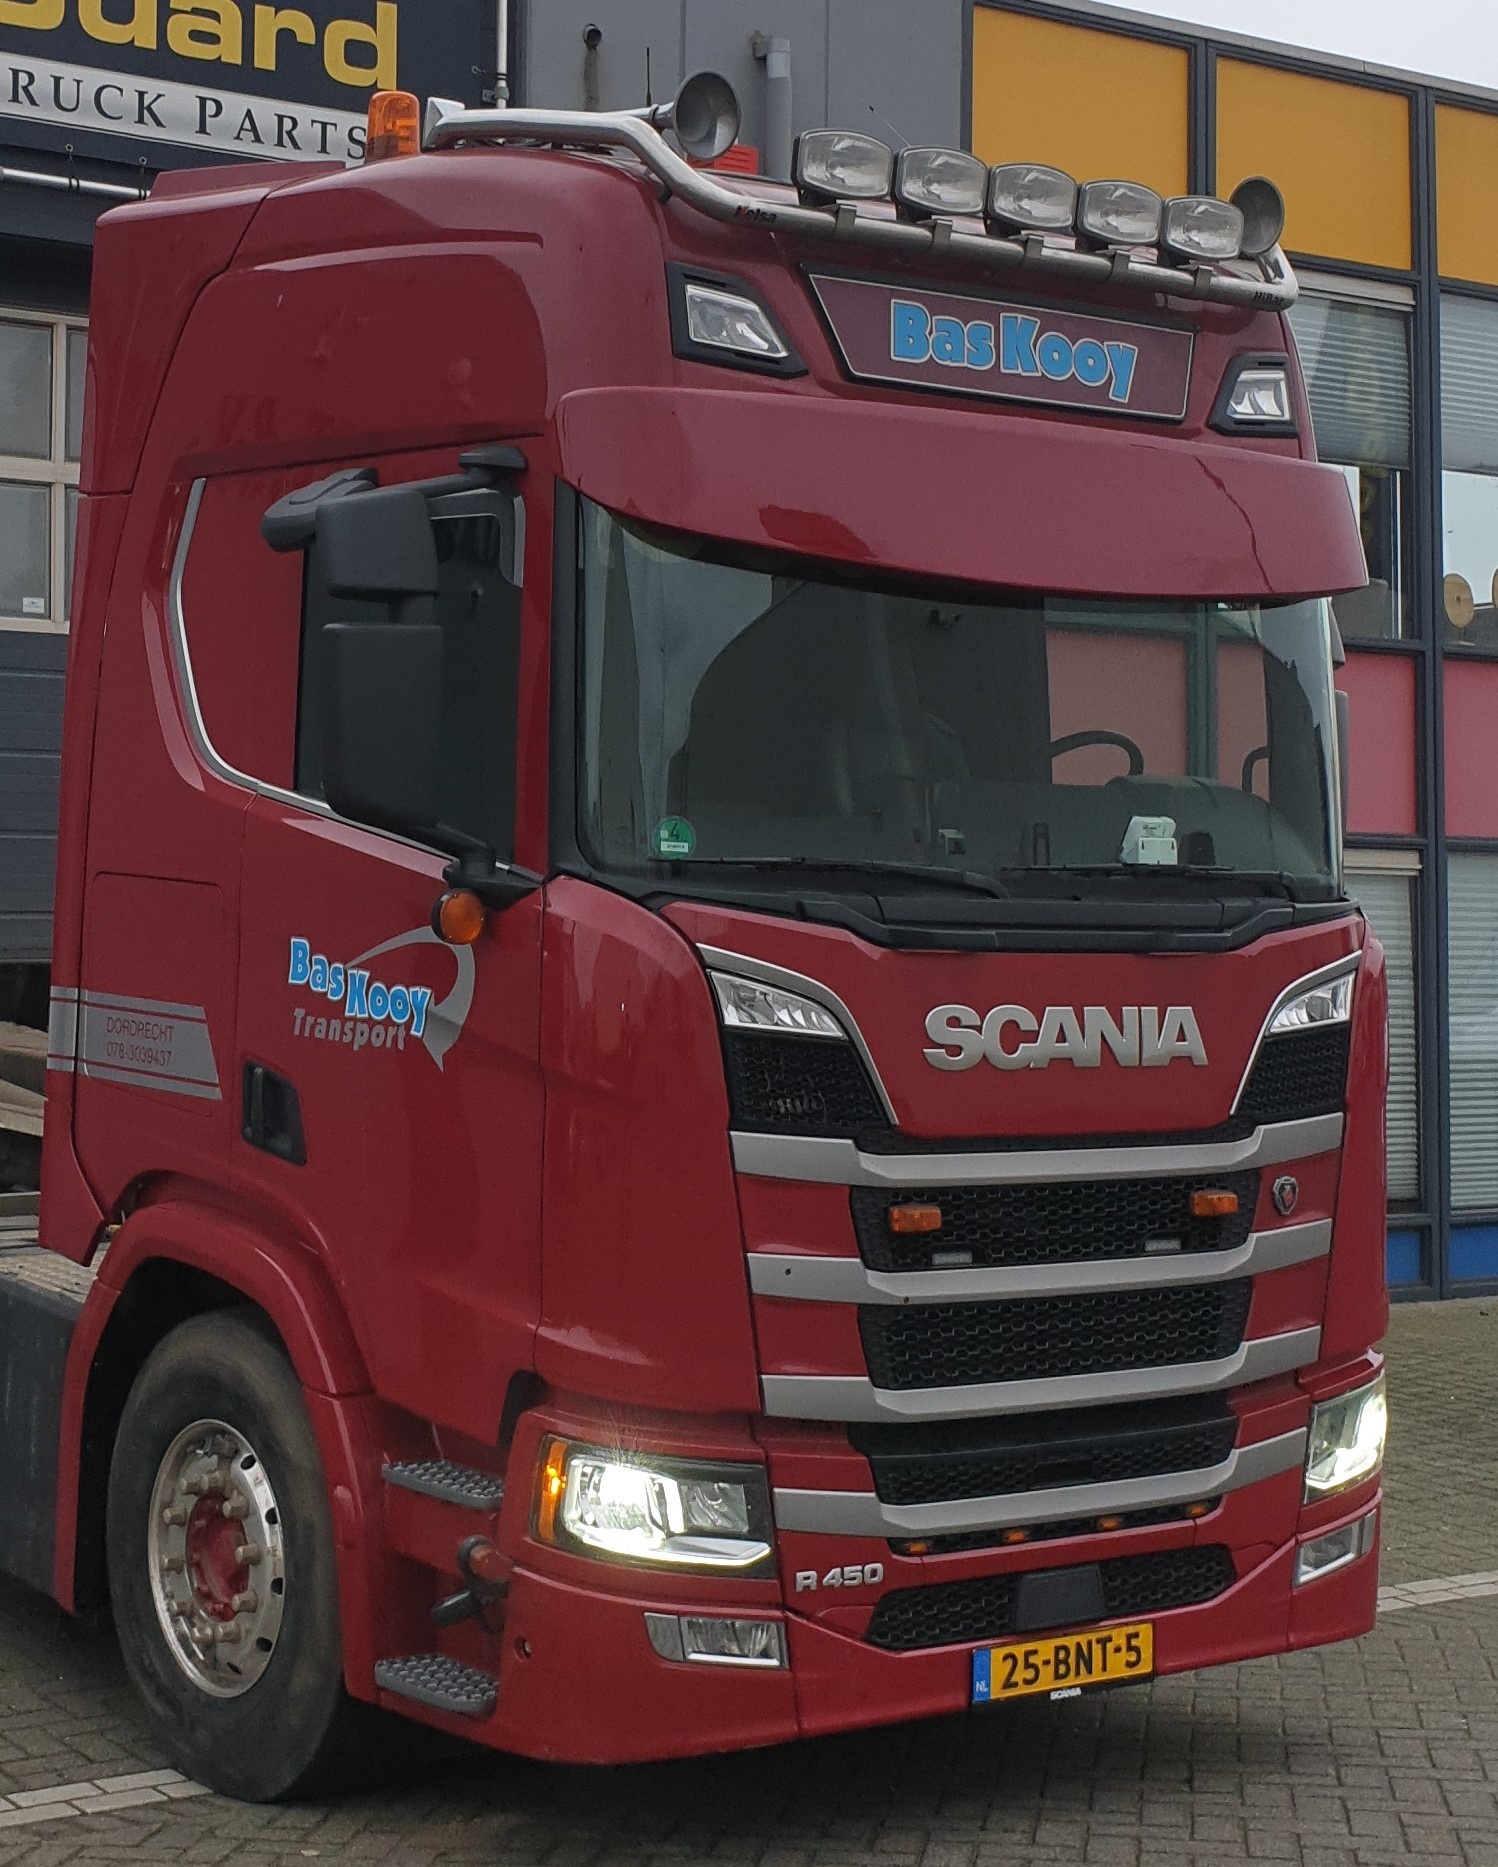 Accessoires Scania Série R - Solar Guard Exclusive Truckparts France